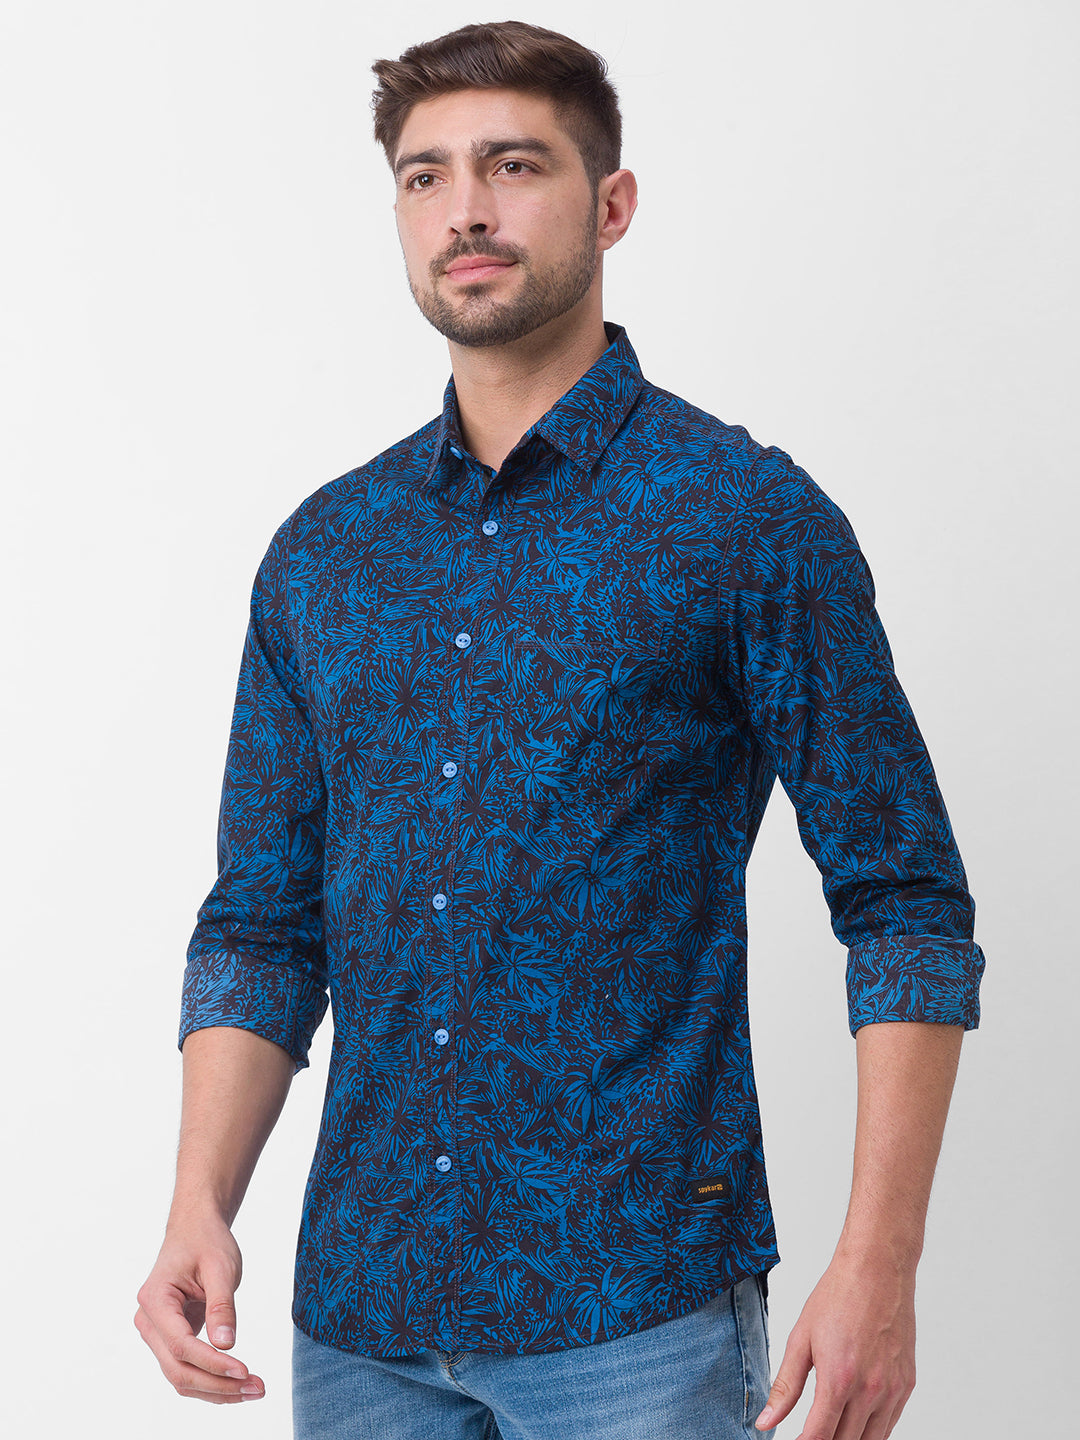 Spykar Indigo Blue Cotton Full Sleeve Printed Shirt For Men